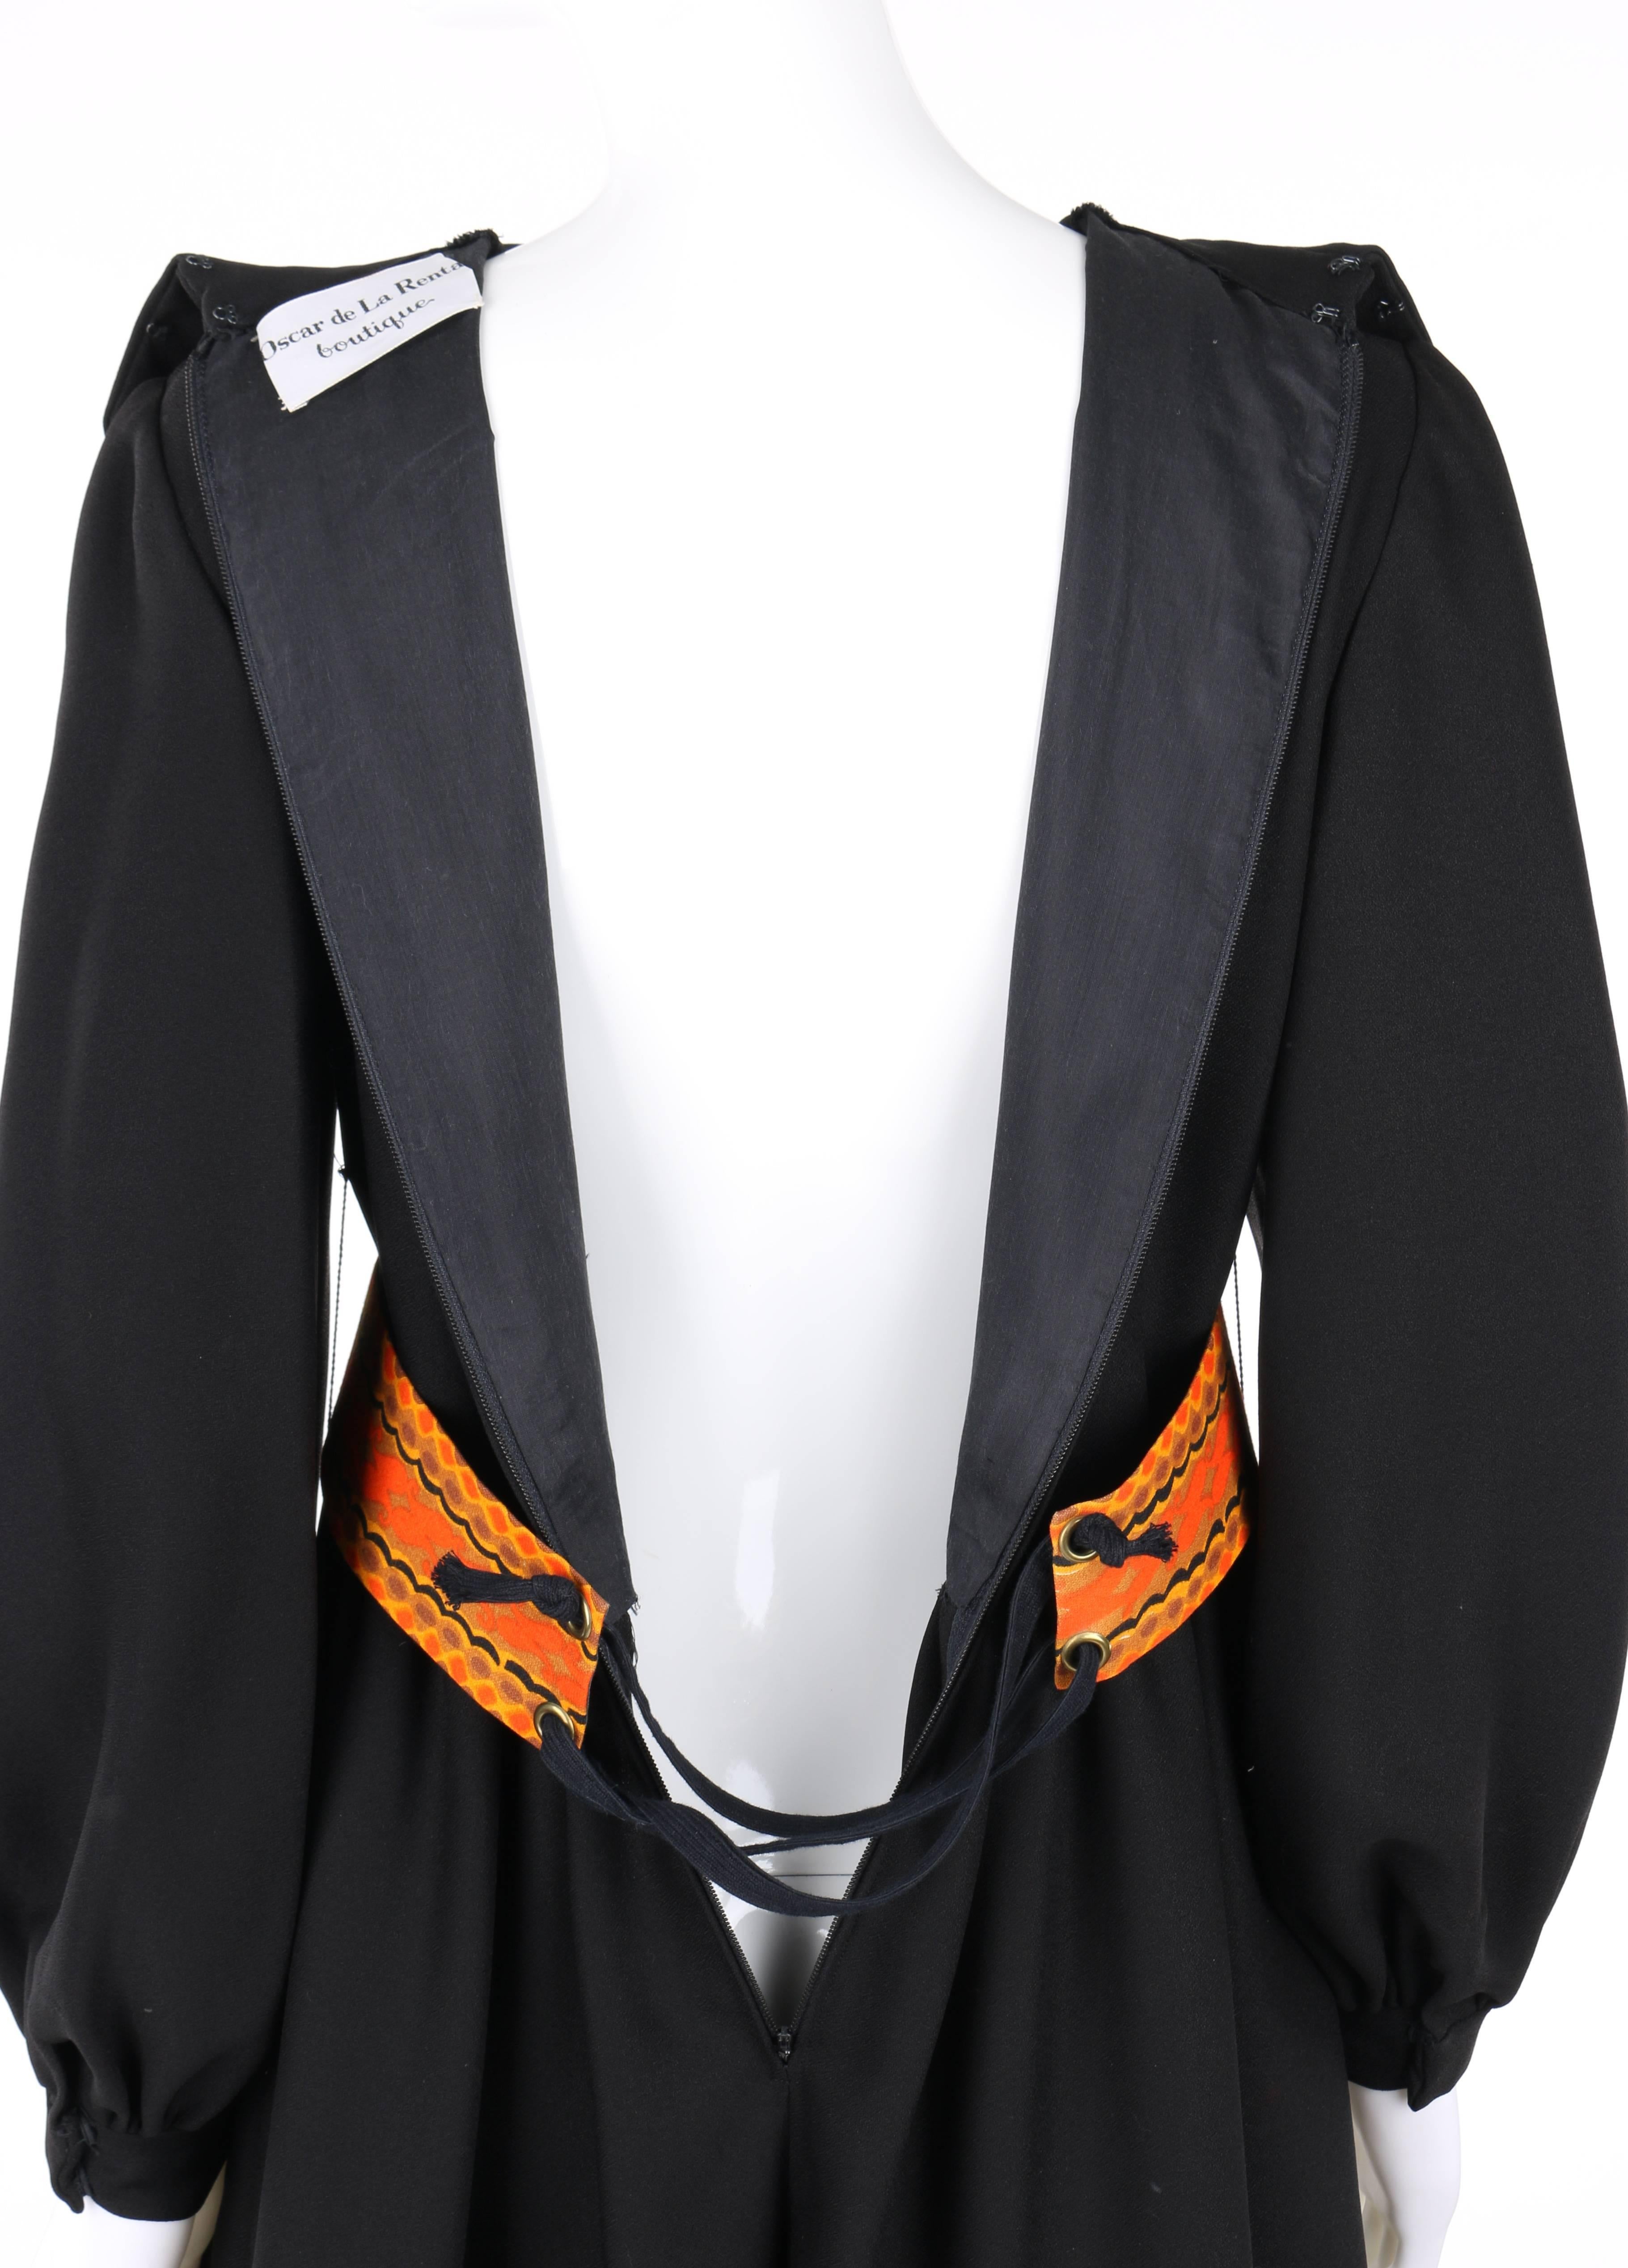 OSCAR DE LA RENTA Boutique c.1970's Black Wool Crepe Long Sleeve Belted Jumpsuit 1